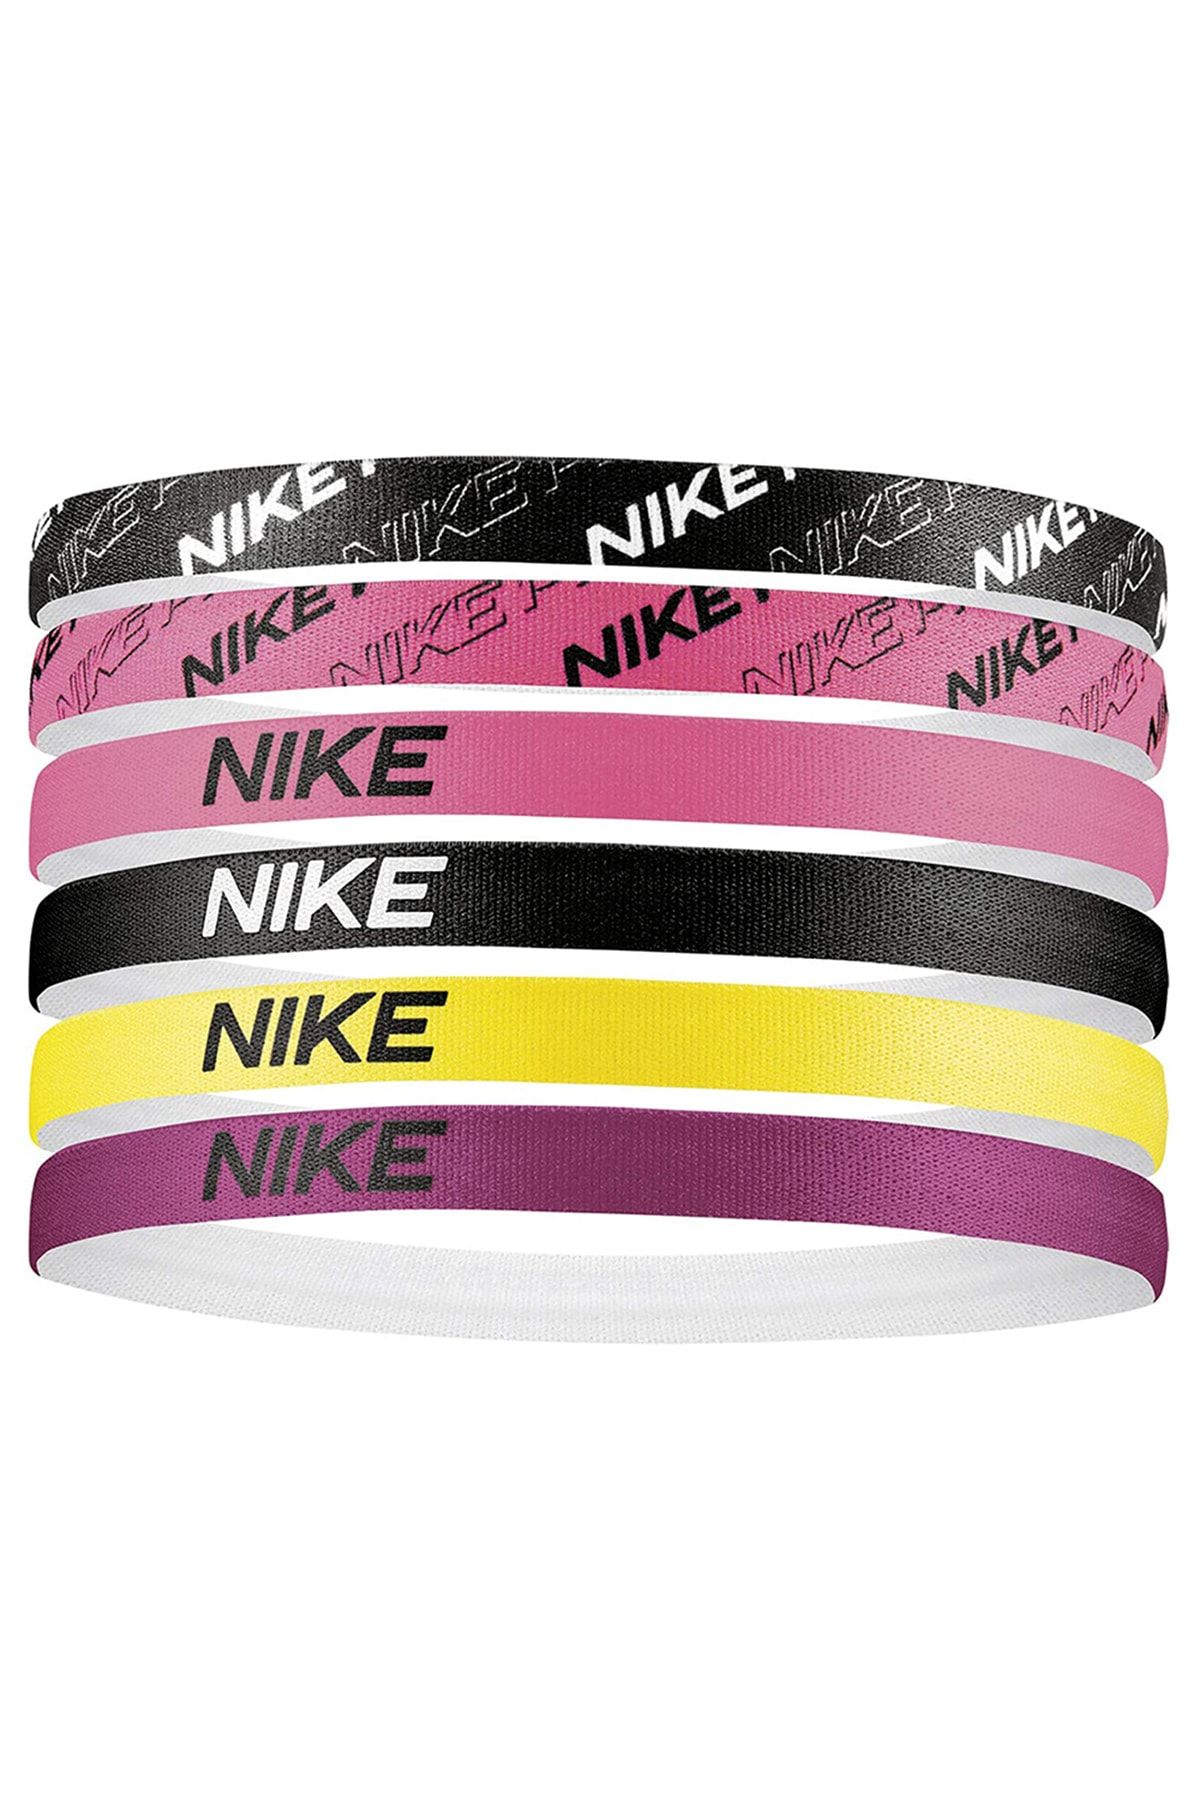 Резинка найк. Headband Nike. Nike Printed Headbands. Headbands Nike тонкая. Nike Headbands 6-Pack.